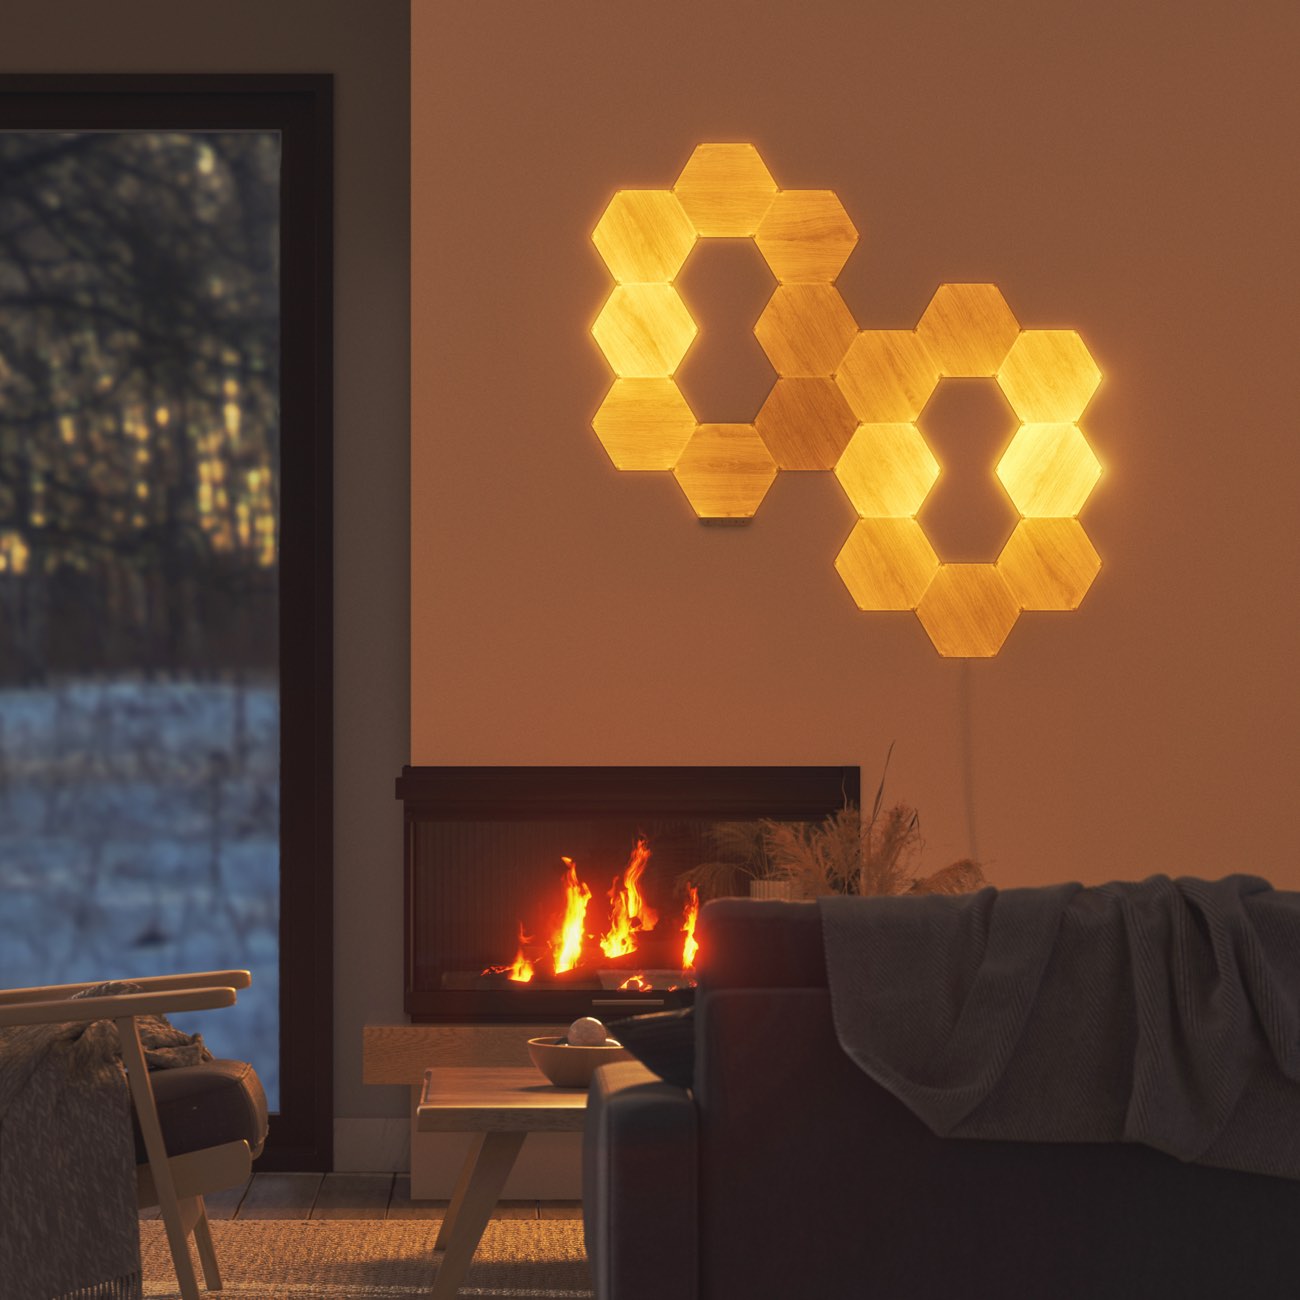 پنل روشنایی هوشمند چوبی دیواری 7 عددی نانولیف مدل Elements Hexagons